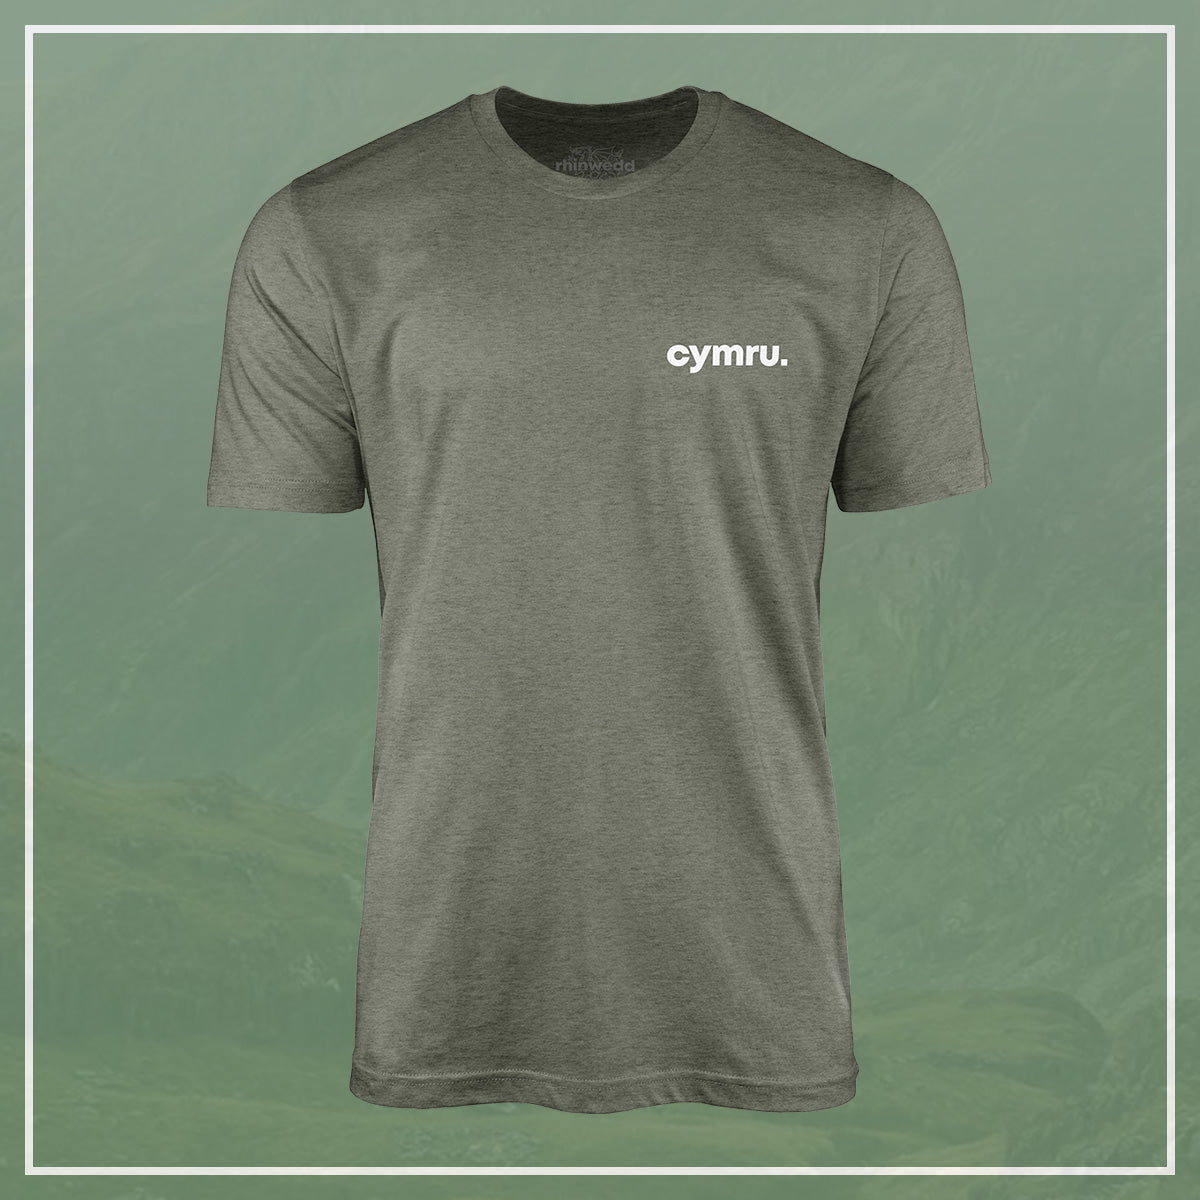 Cymru T-Shirt - Khaki